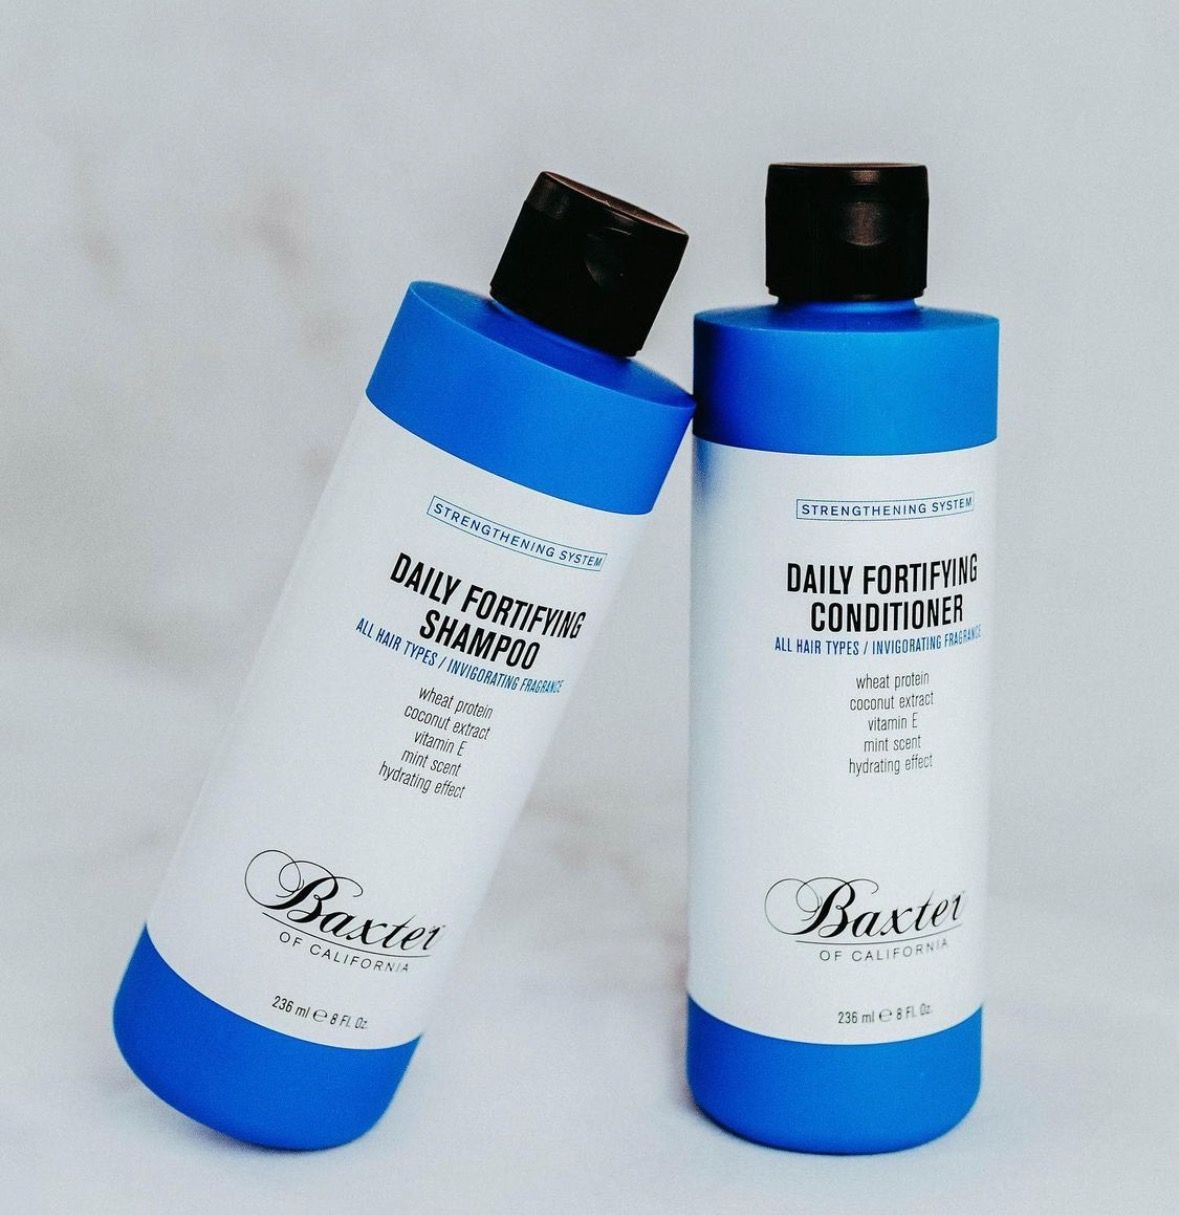 Reuzel Hair Care Bundle: Daily Shampoo & Conditioner